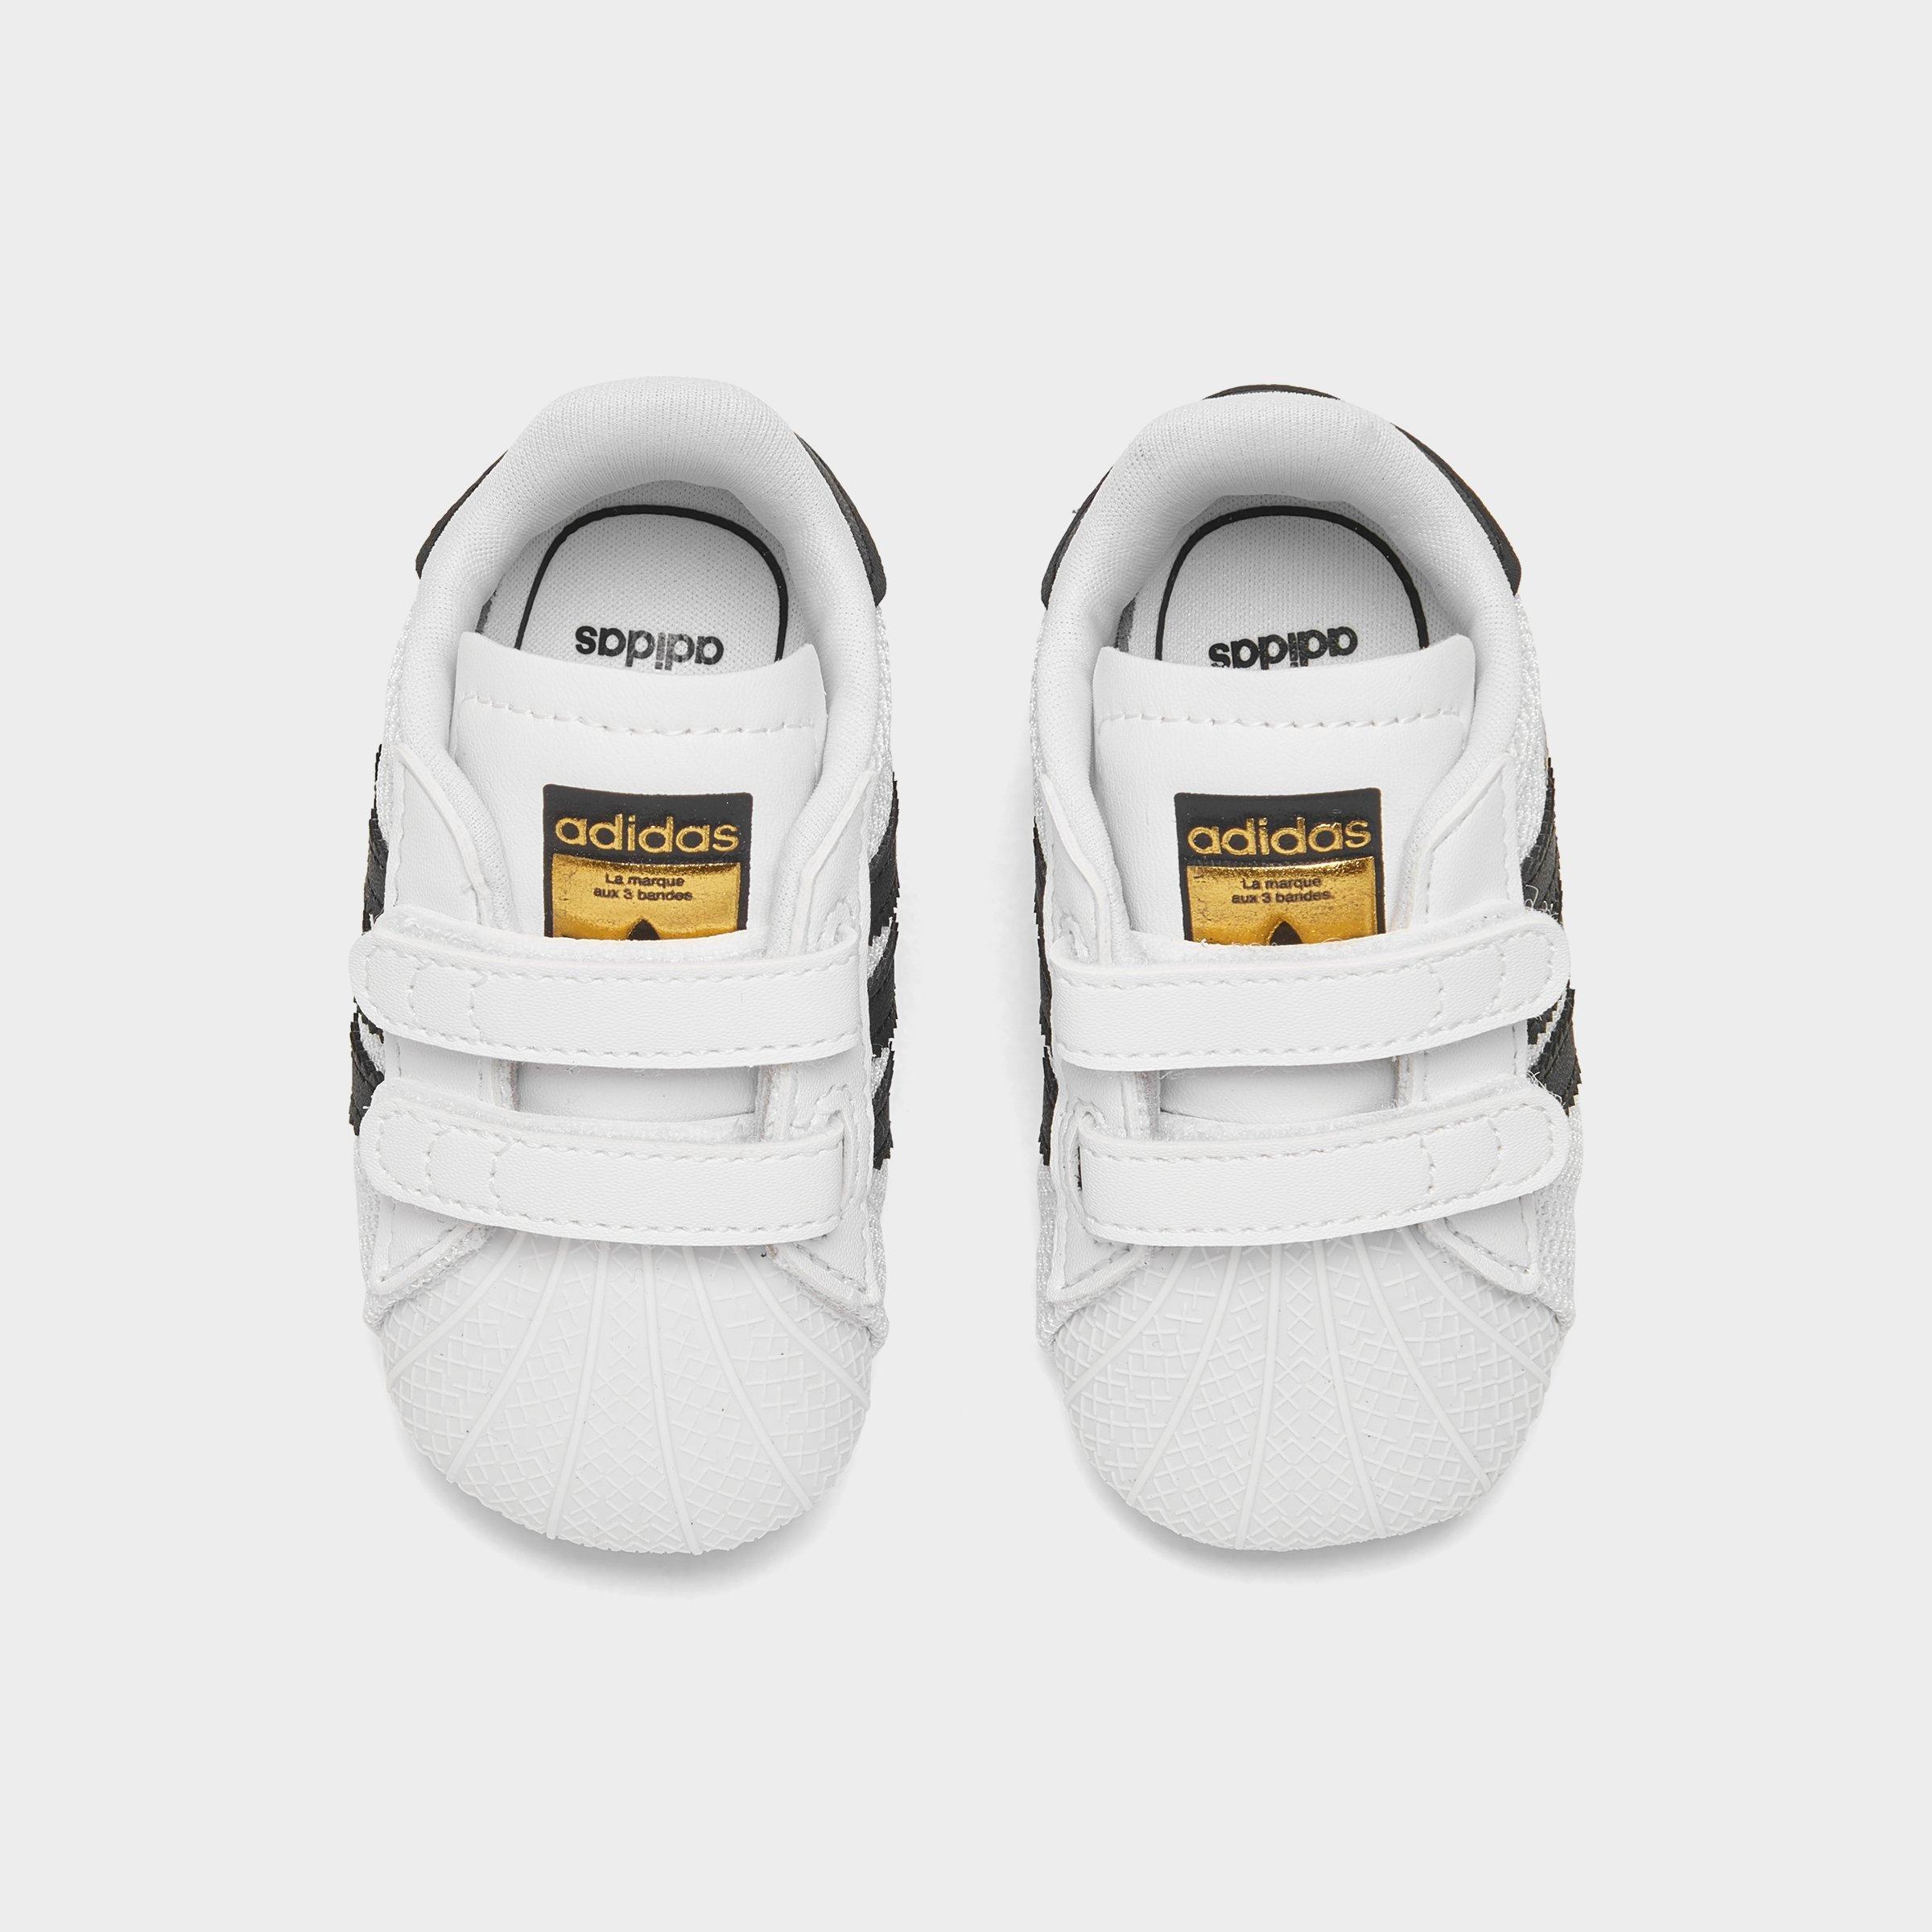 adidas infant shoes